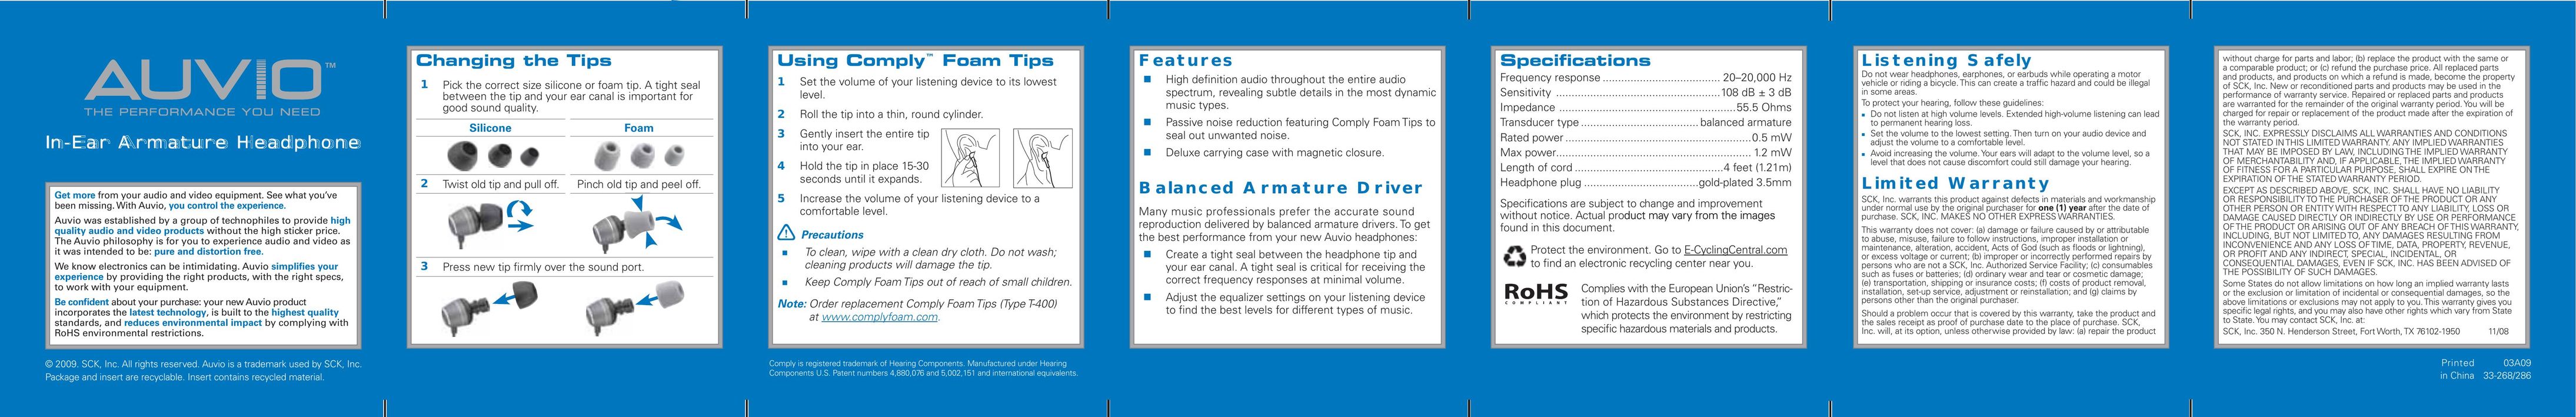 Radio Shack 33-268 Headphones User Manual